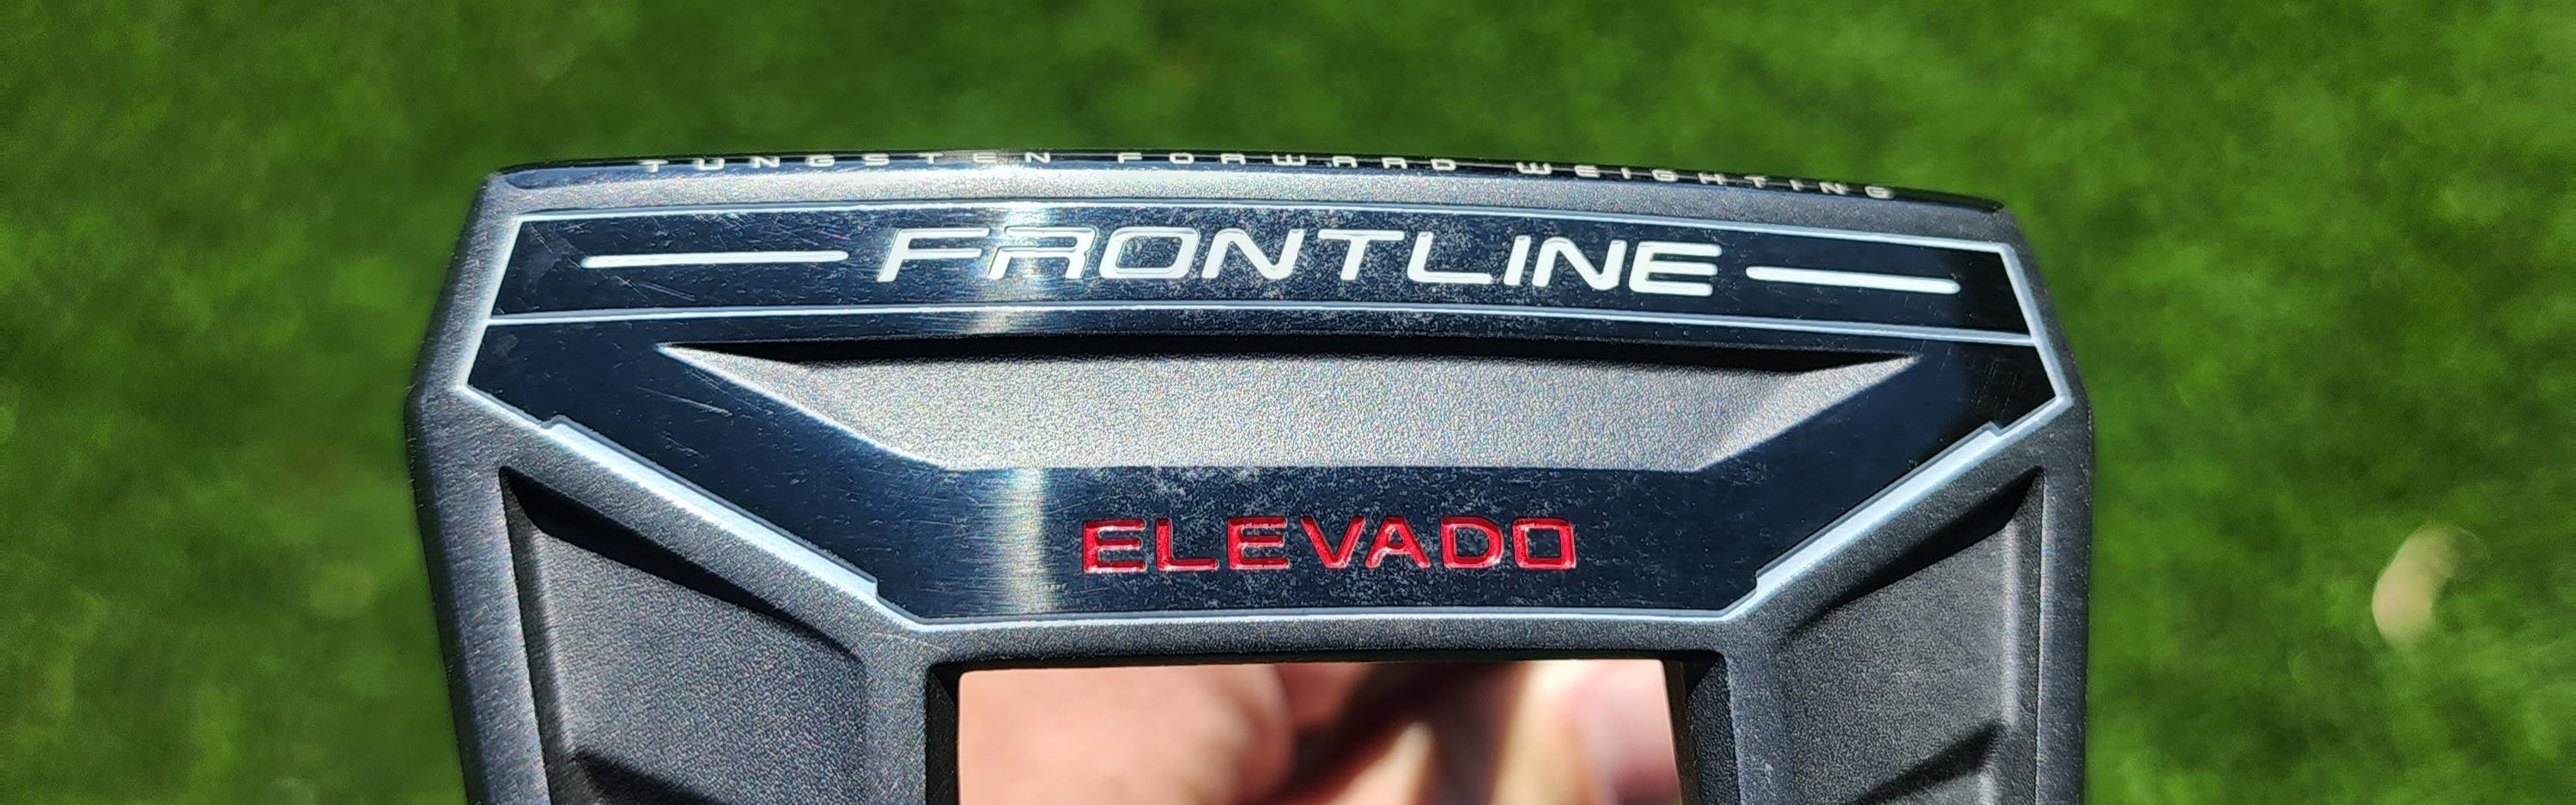 The Cleveland Frontline Elevado Single Bend Putter.